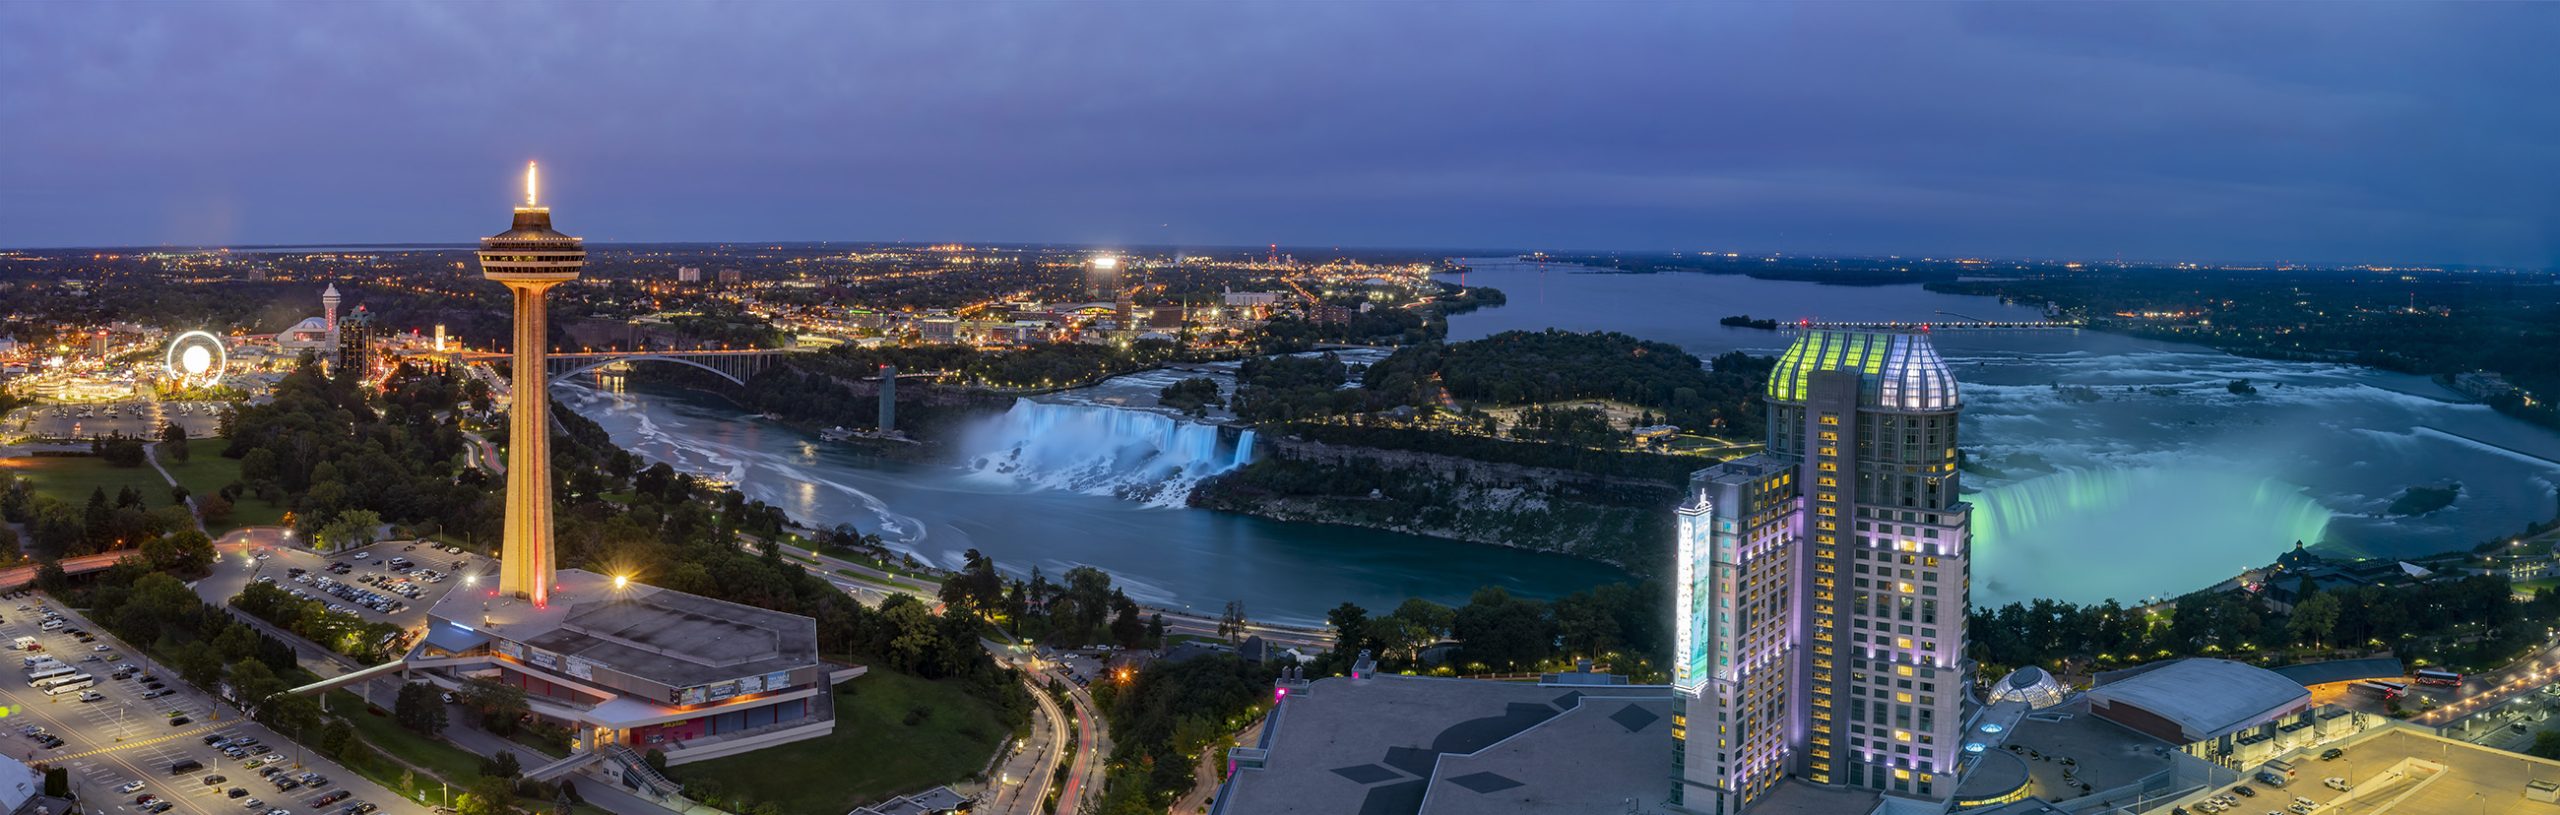 Niagara Falls Aerial View In Night